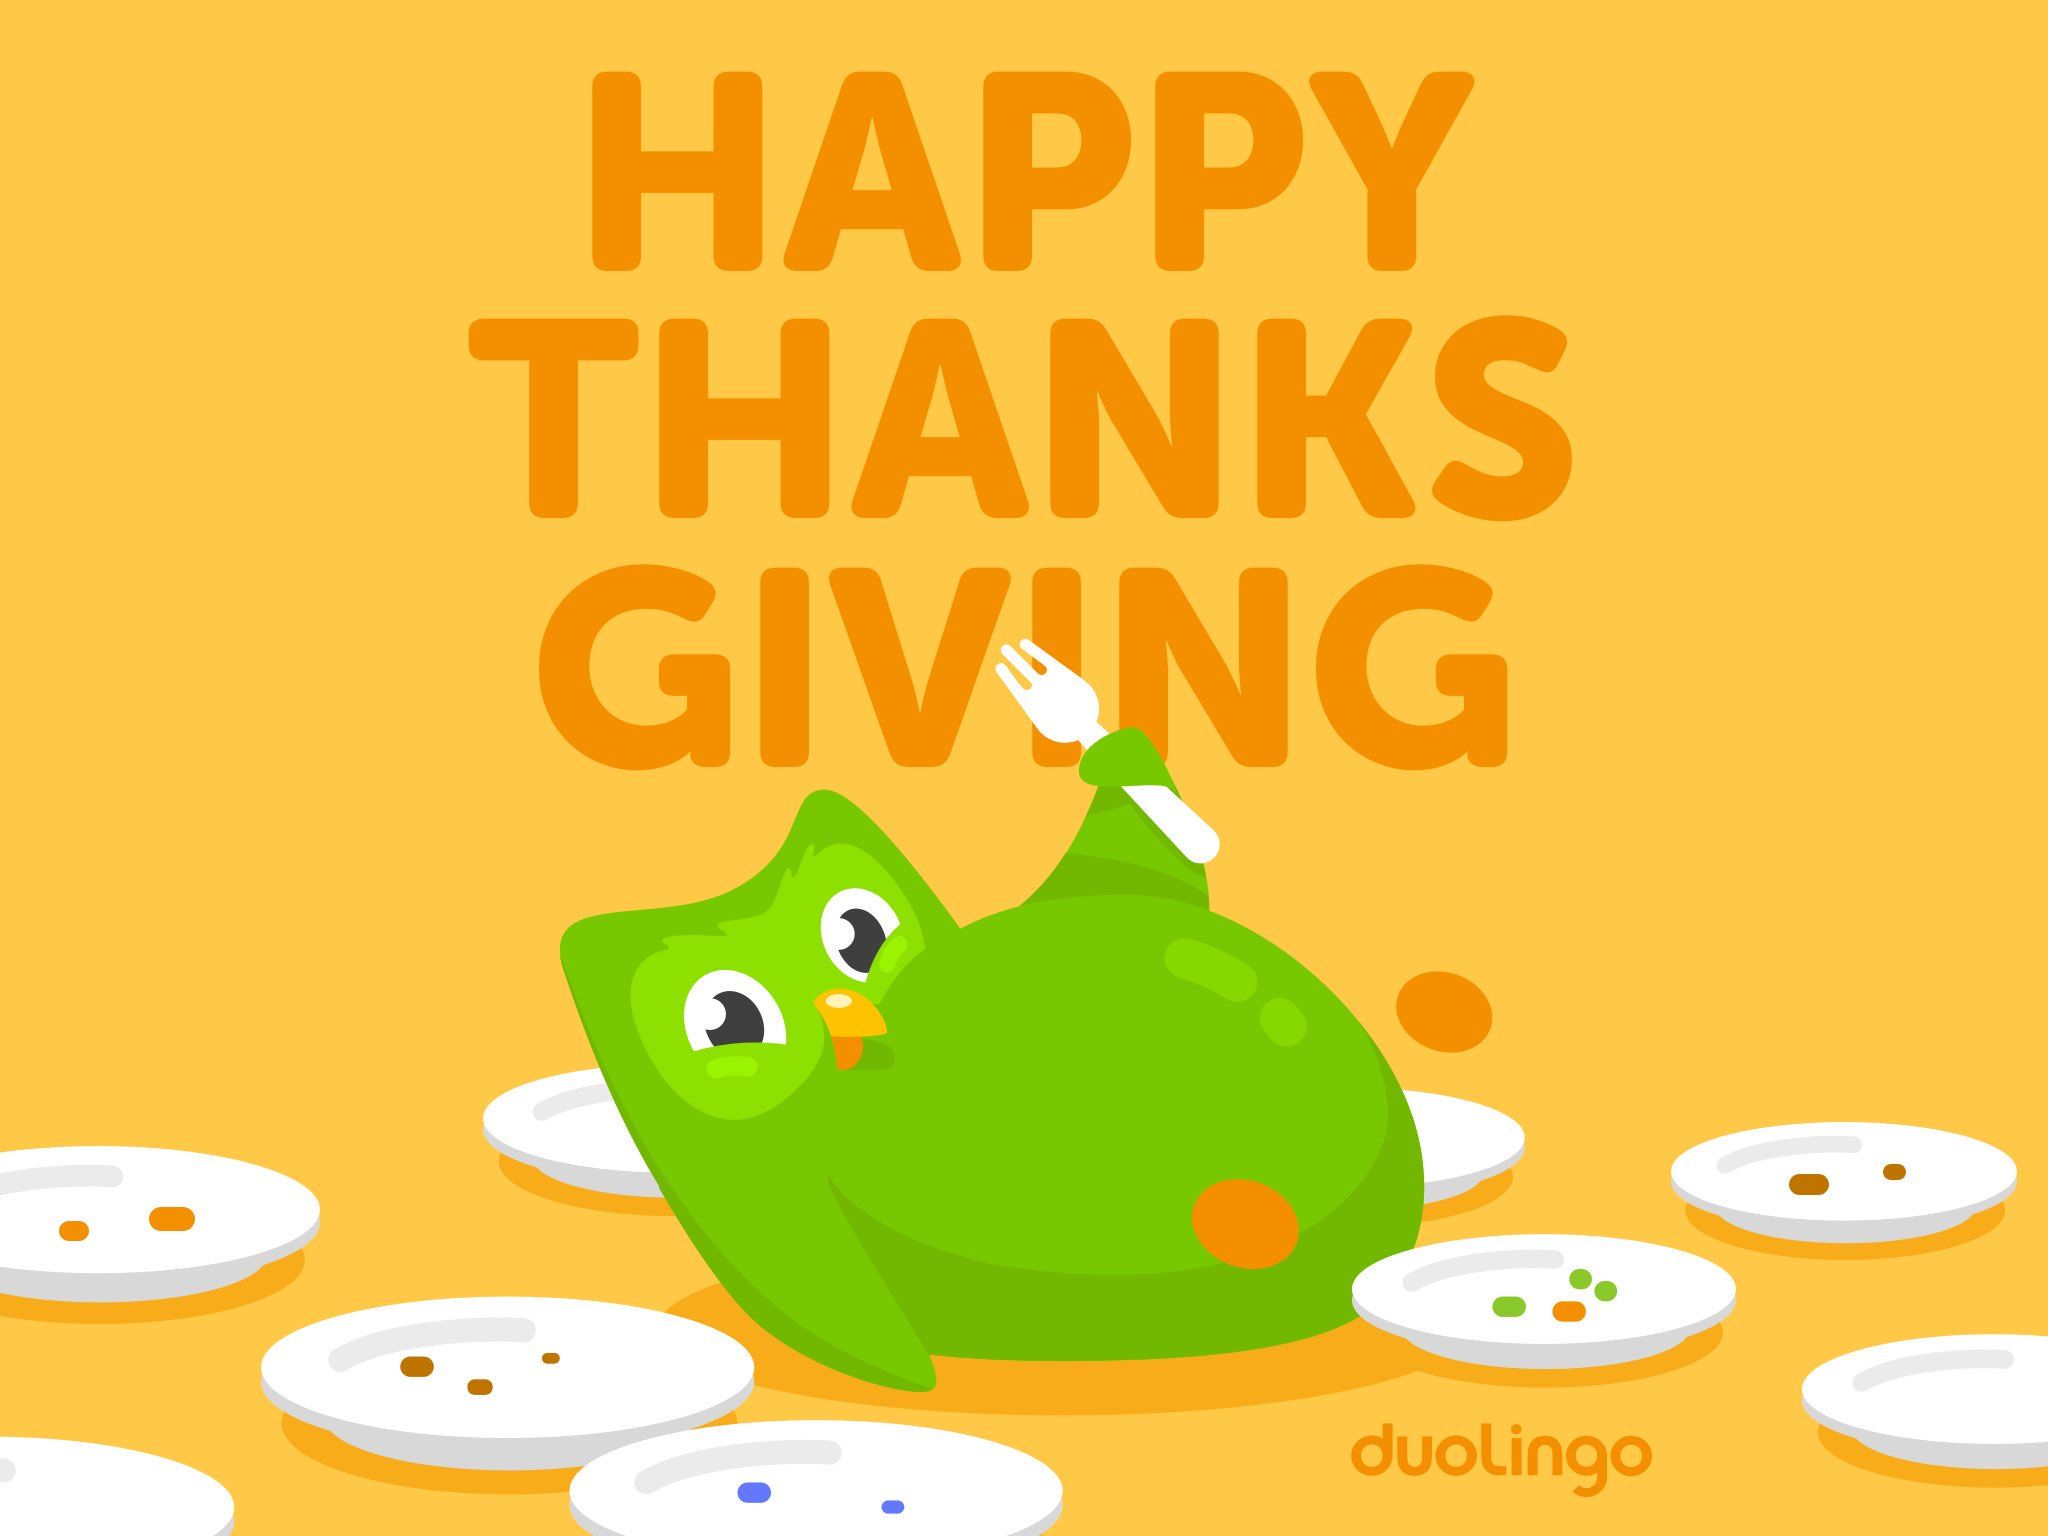 Duolingo's Thanksgiving post